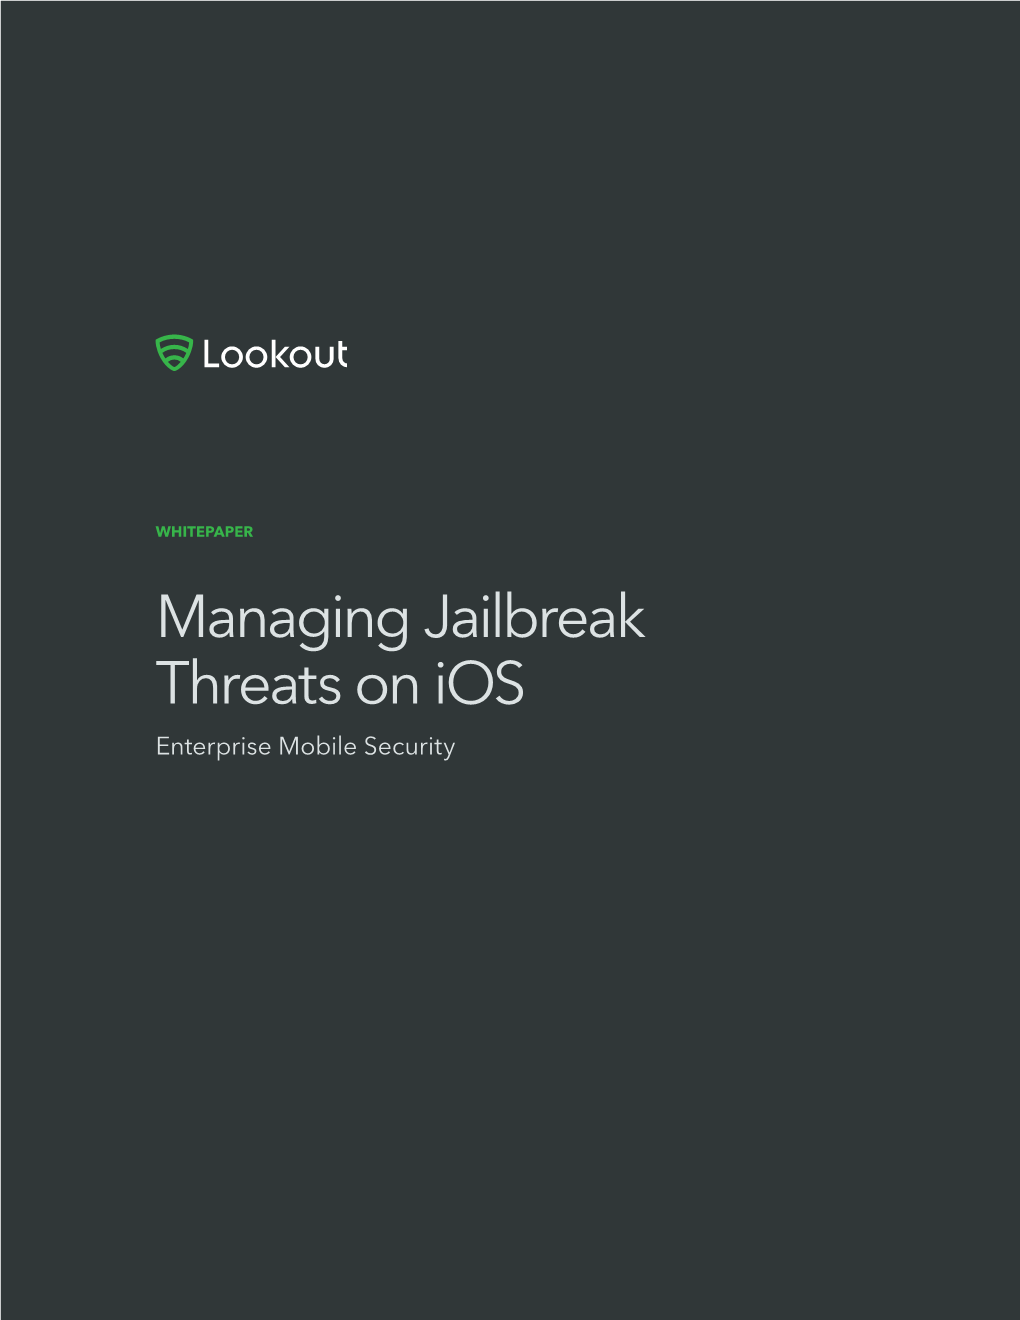 Managing Jailbreak Threats on Ios Enterprise Mobile Security WHITE PAPER